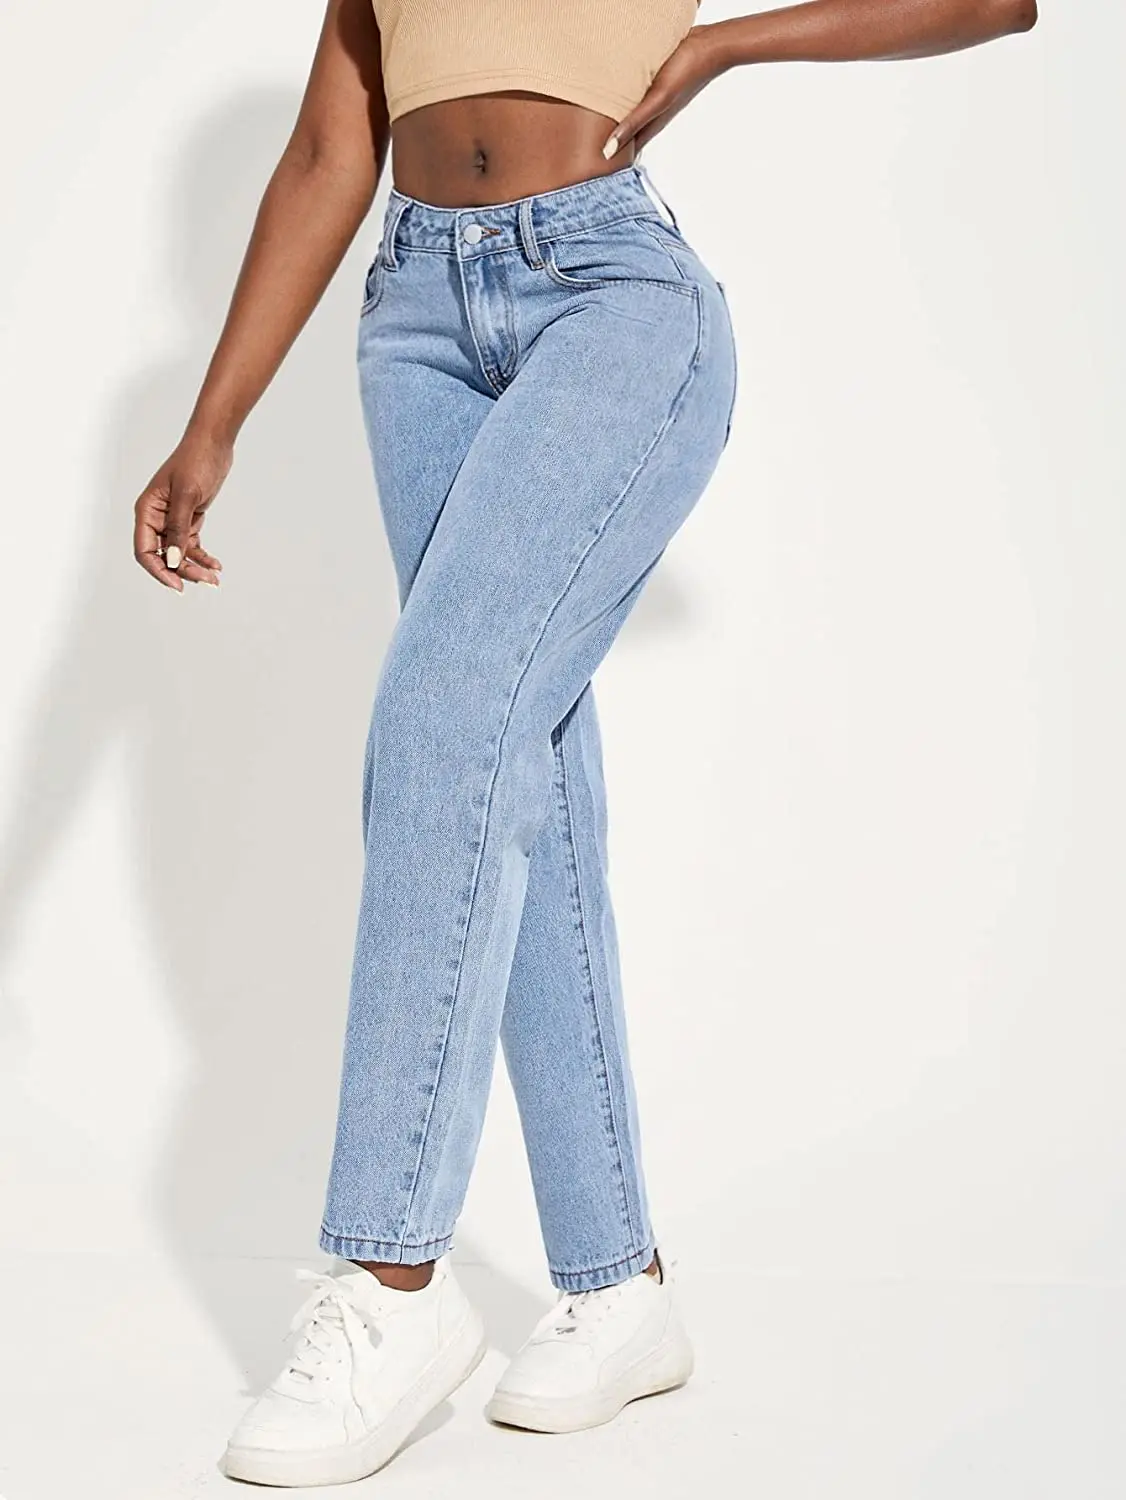 2022 Harem Hip Hop Denim Pants High Waist  Large Pockets Loose Fit Boyfriends Women's Jeans Tenths  length High street trousers